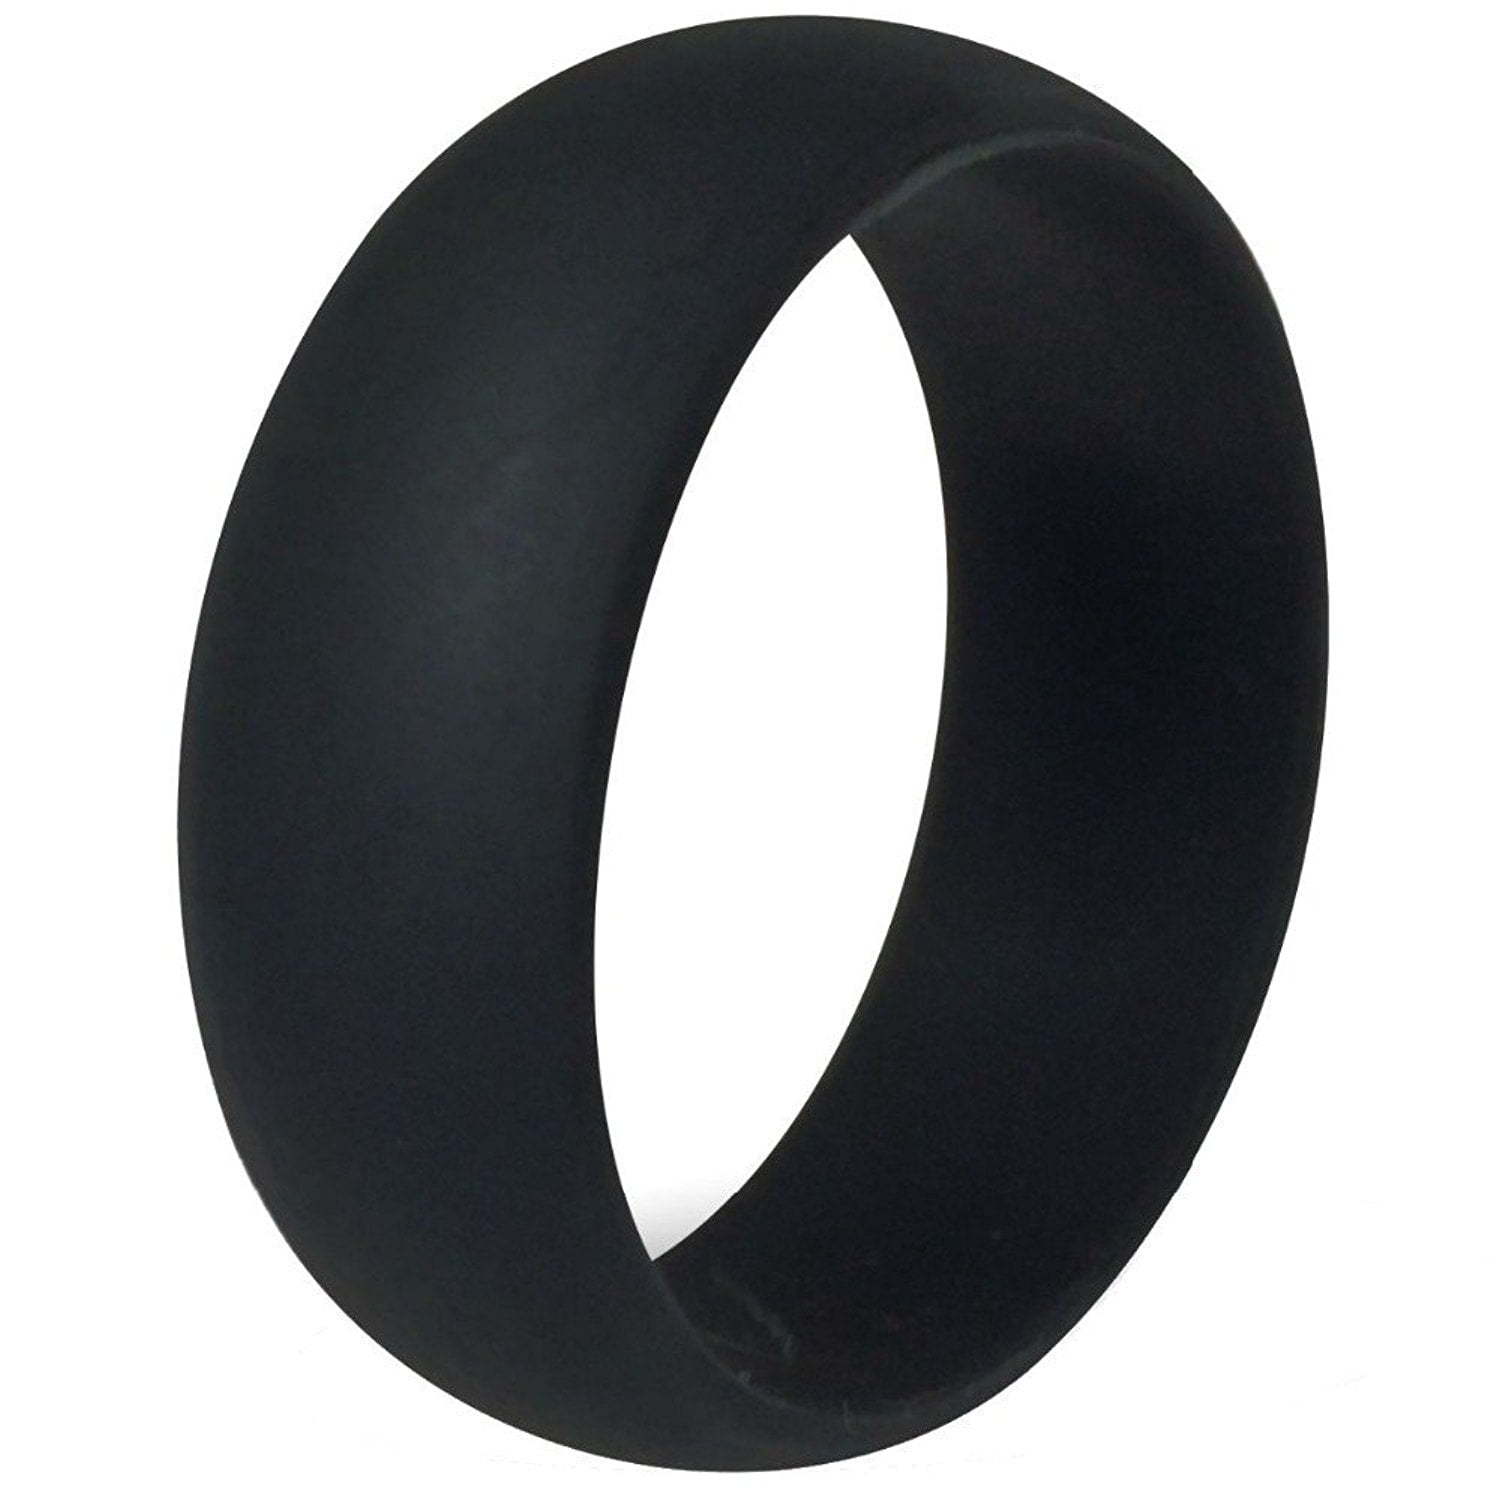 Flexible Silicone Rubber Wedding Band Ring Black & white size 7 